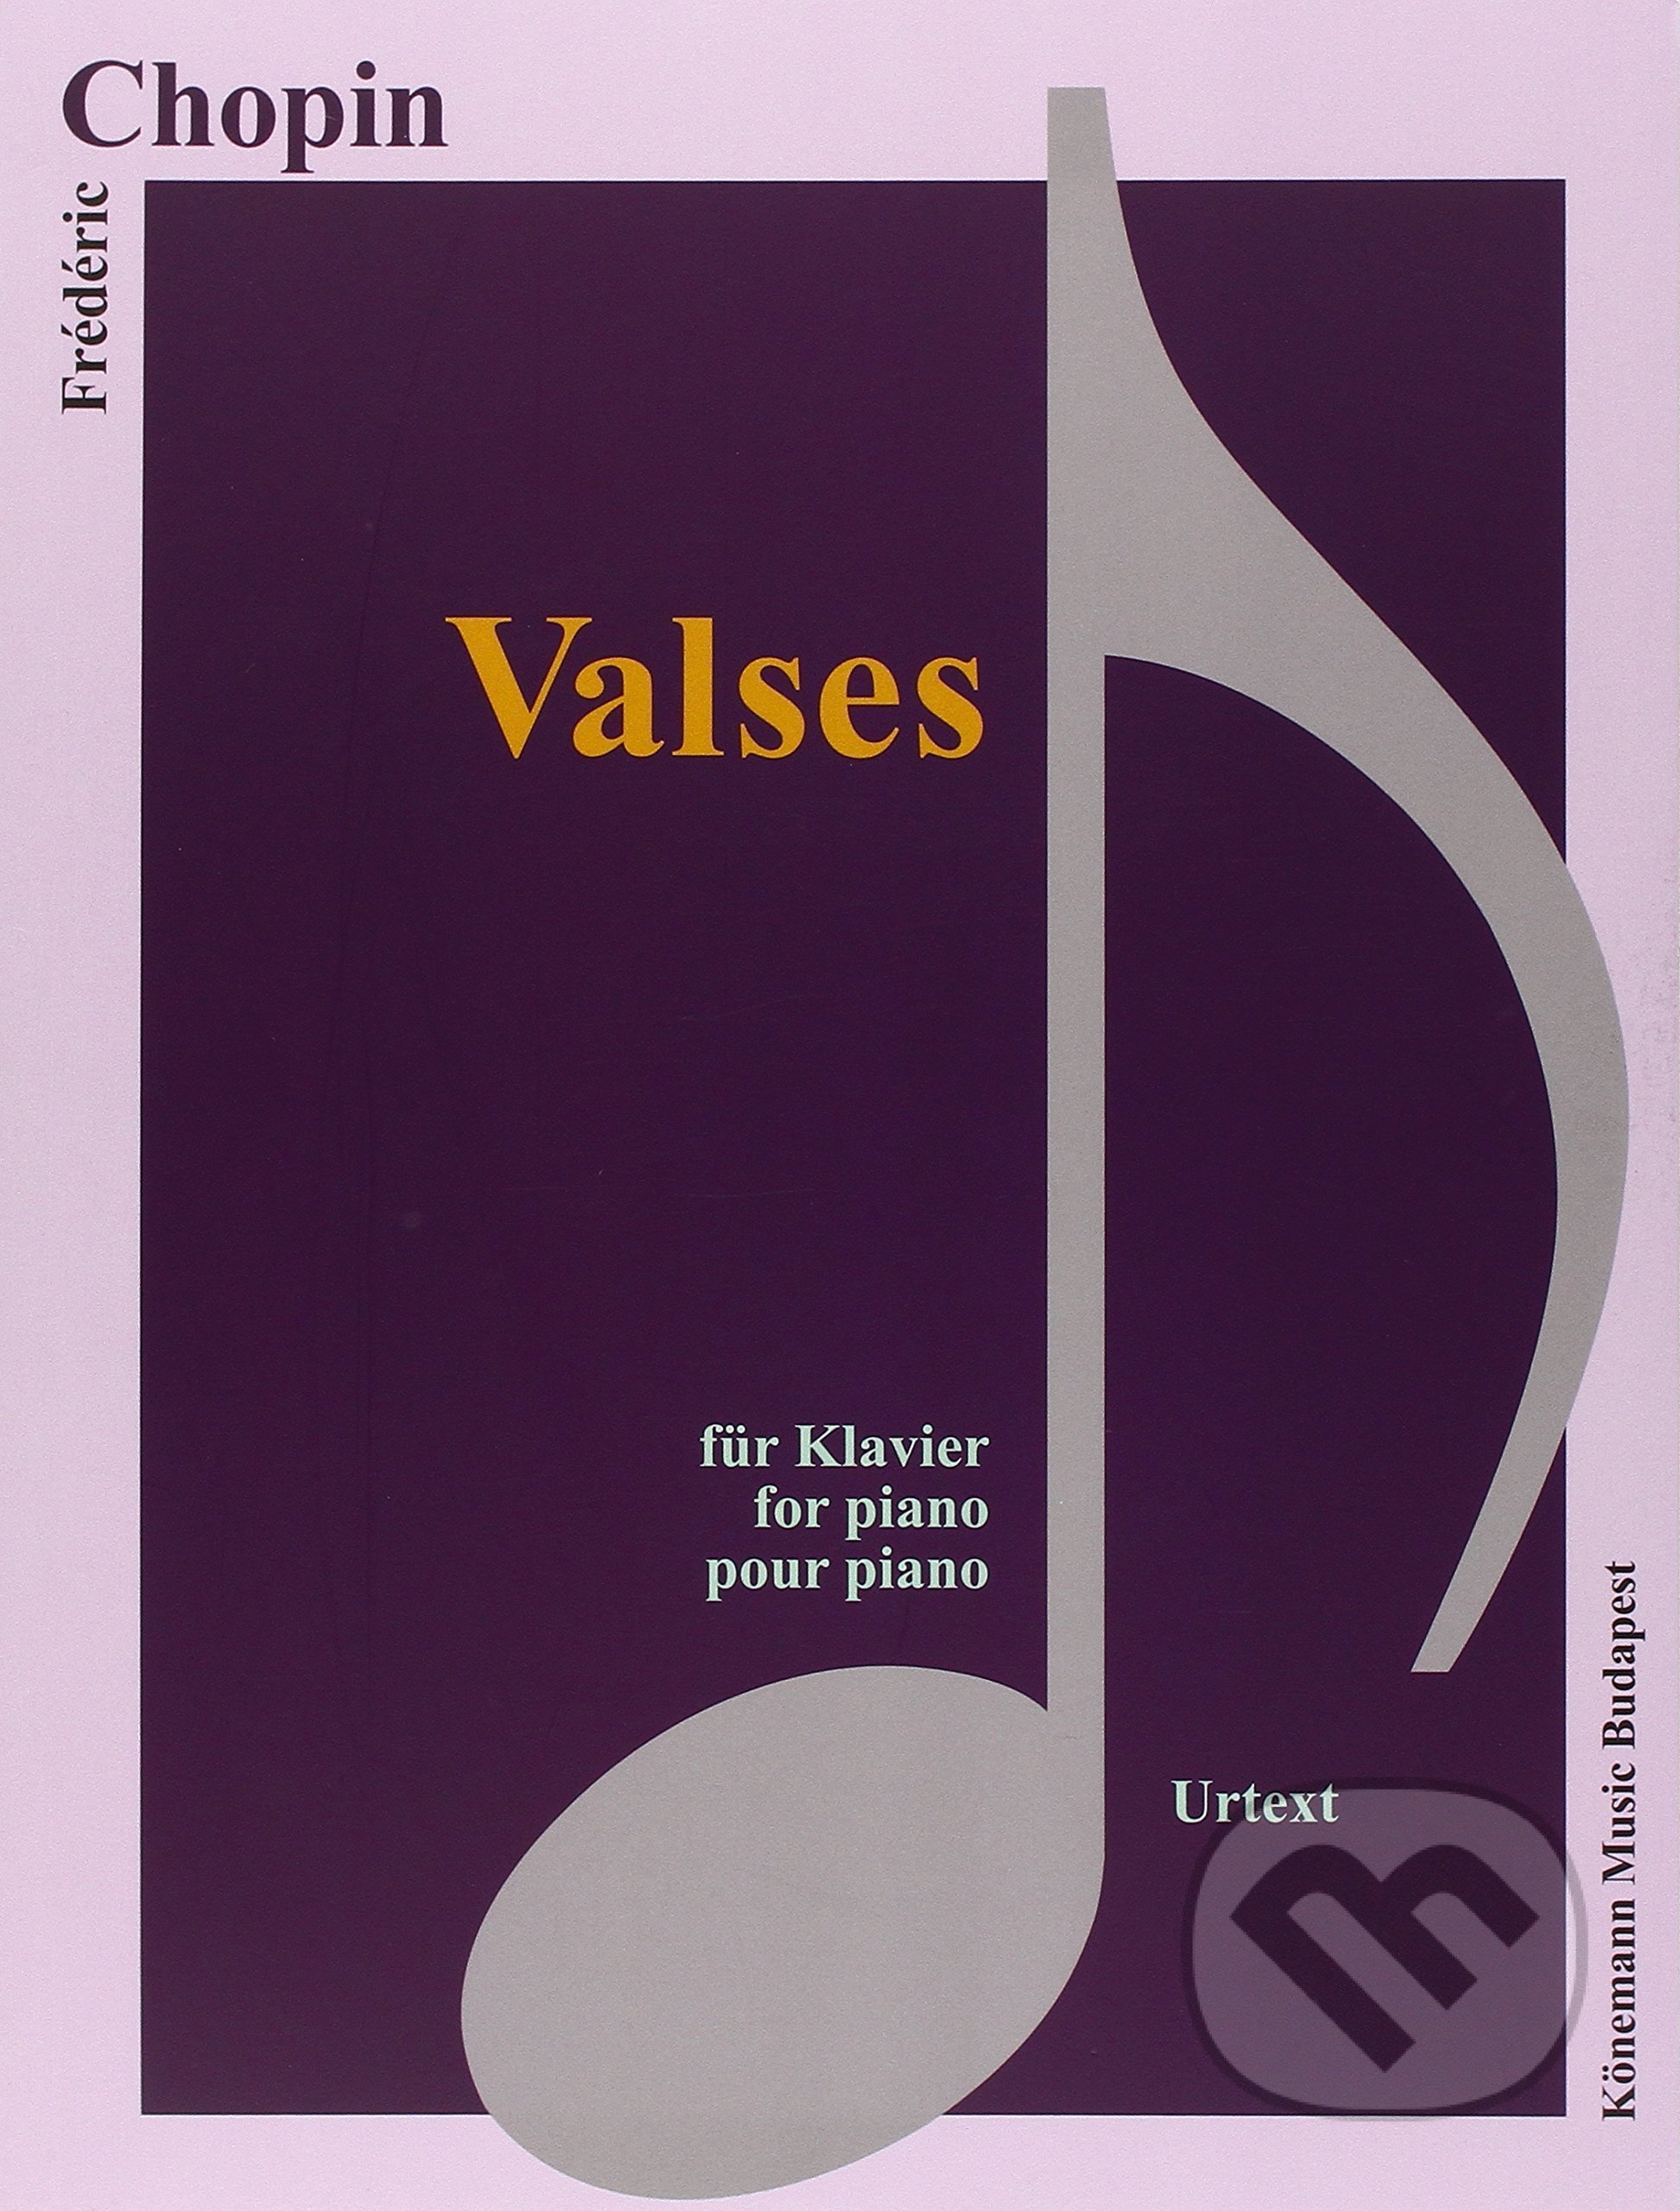 Valses - Frédéric Chopin, Könemann Music Budapest, 2015